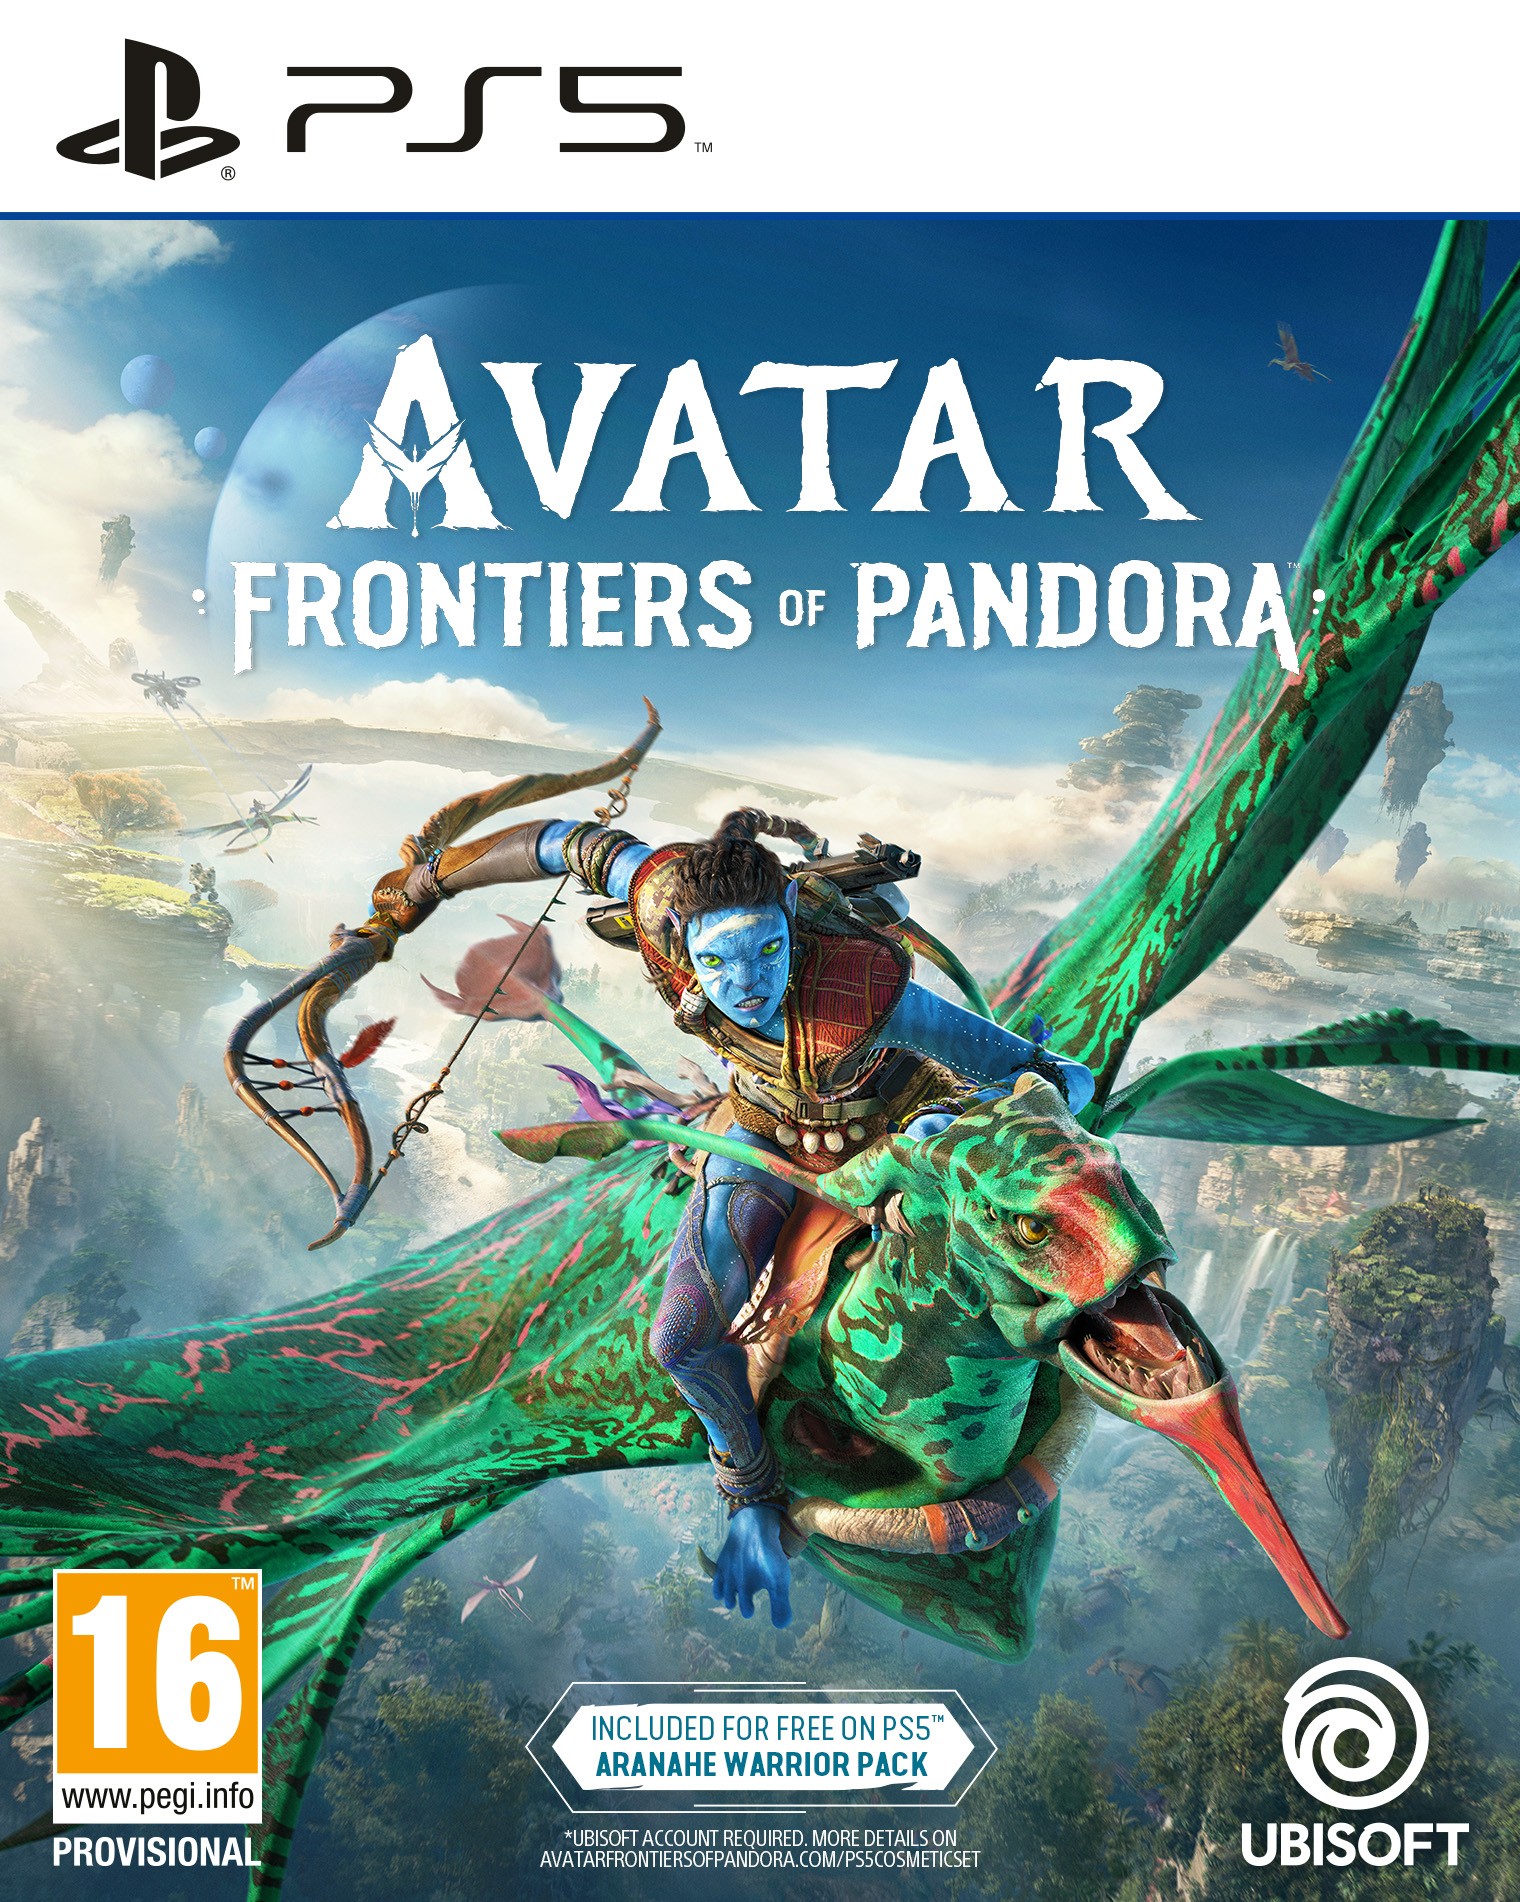 Avatar: Frontiers of Pandora + Preorder Bonus